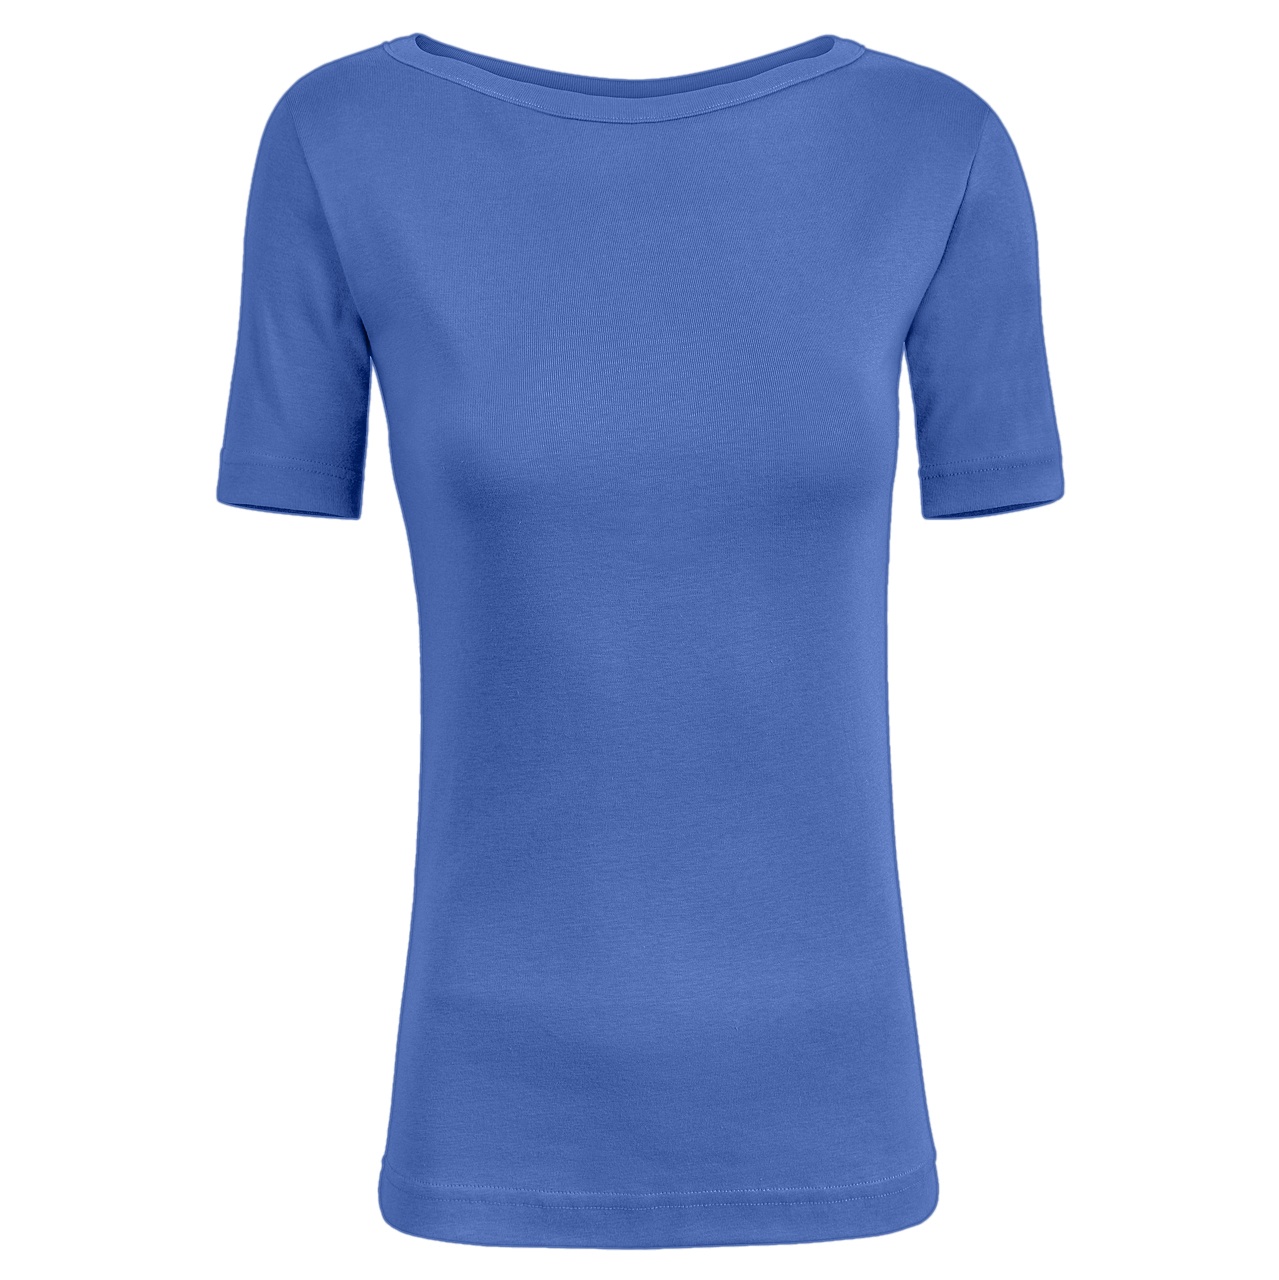 تی شرت زنانه ساروک مدل TZYGHF09 رنگ آبی